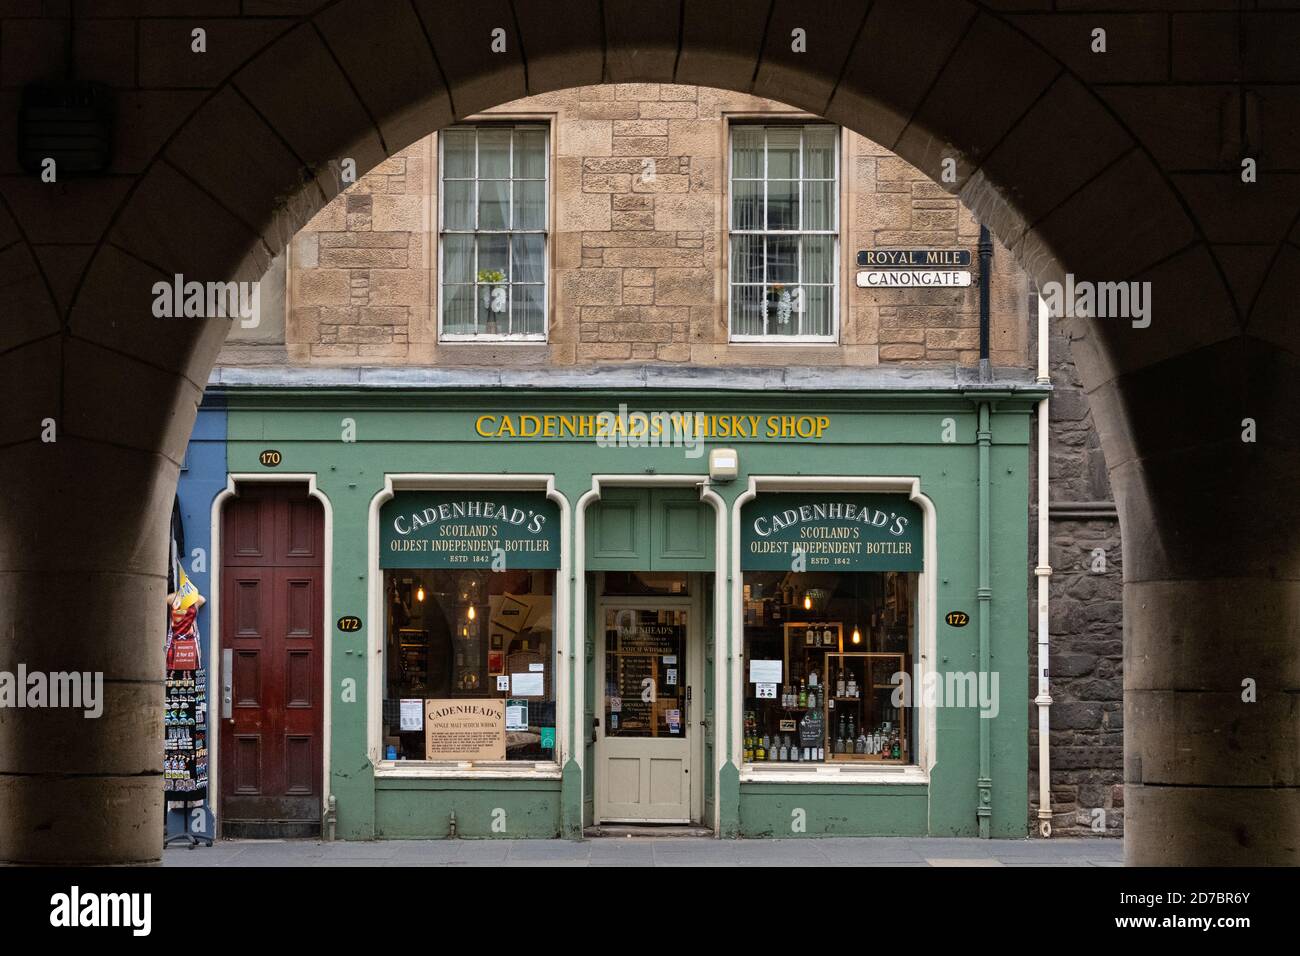 Cadenheads Whisky Shop, Canongate, Royal Mile, Edinburgh Old Town, Schottland, UK - 'Scotlands ältester unabhängiger Abfüller' Stockfoto